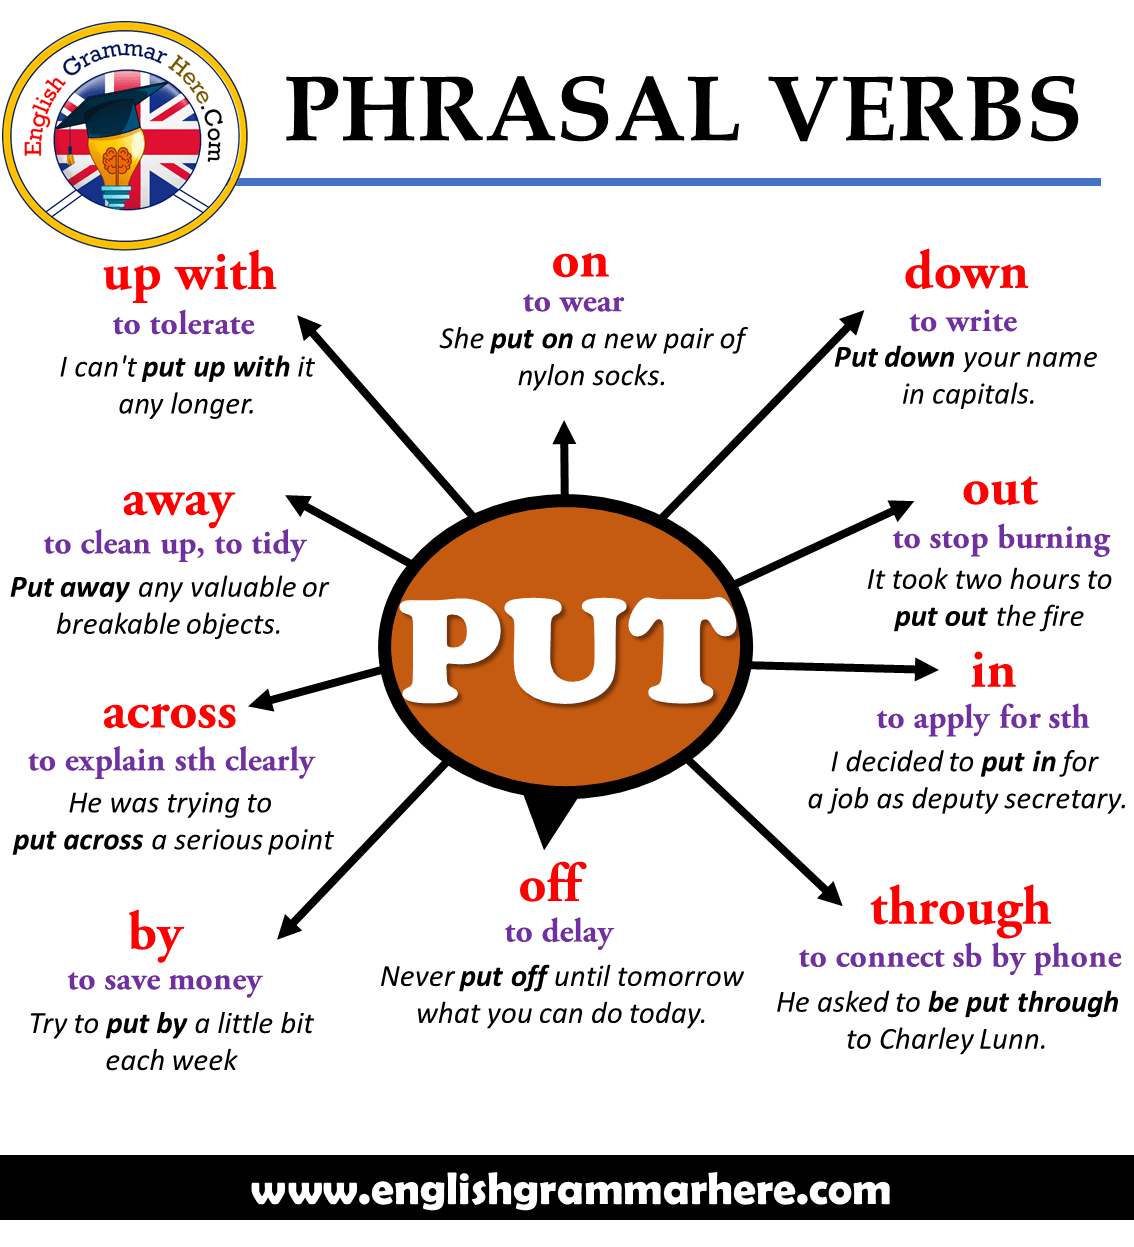 Fill in away off. Фразовые глаголы в английском put. Phrasal verbs таблица put. Английские фразовые глаголы. Phrasal verbs в английском языке.